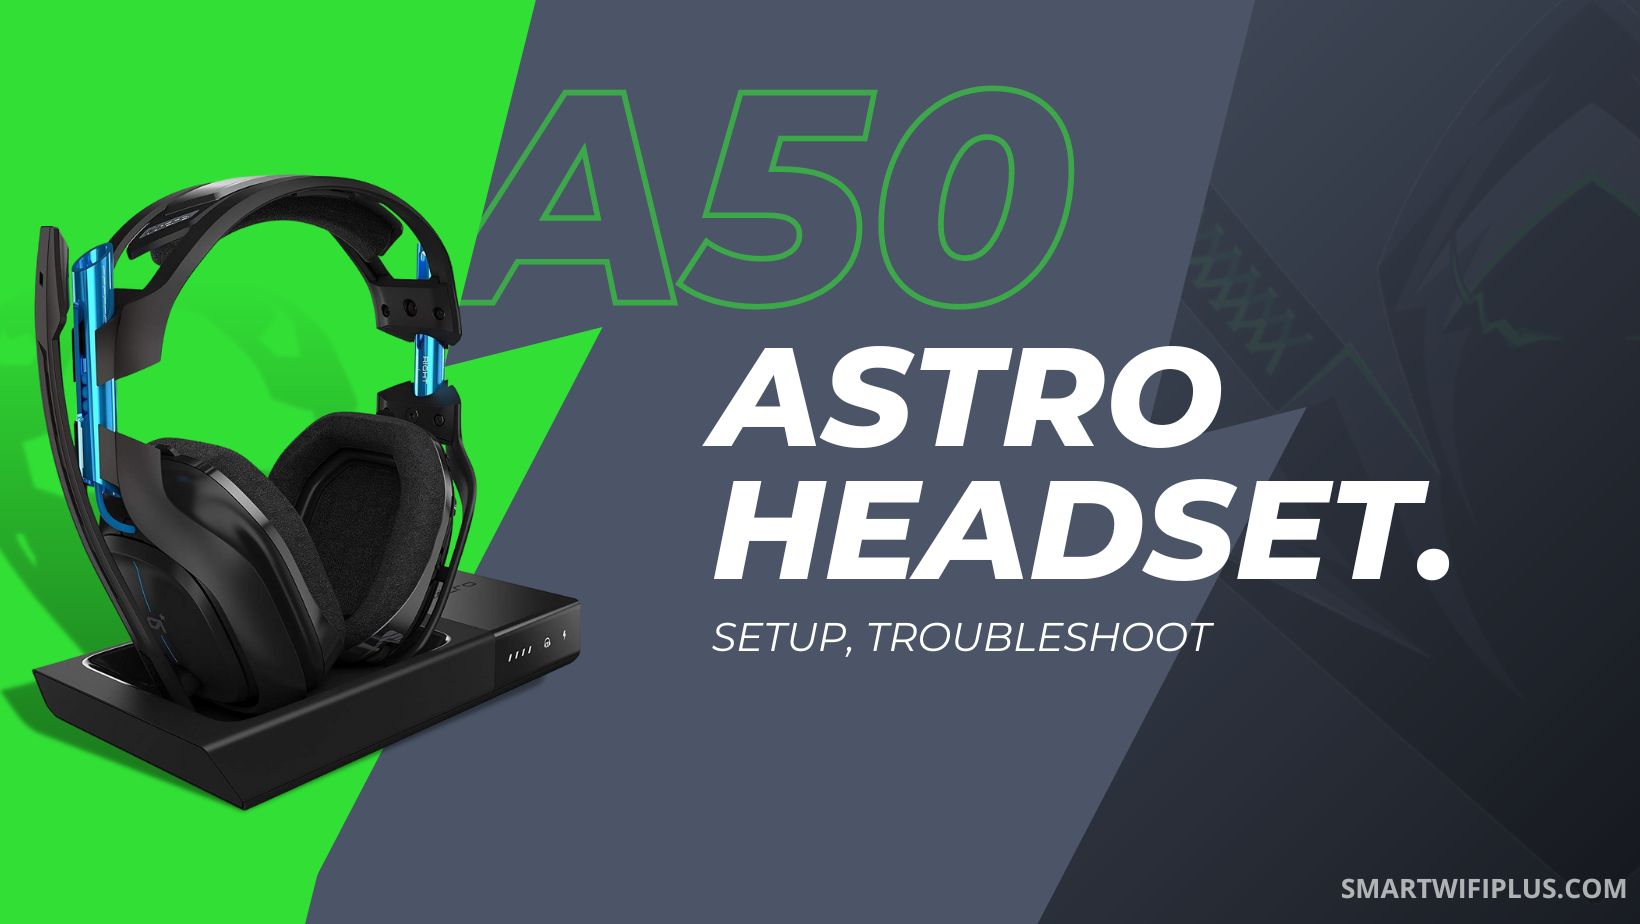 Astro a50 Headset setup troubleshoot